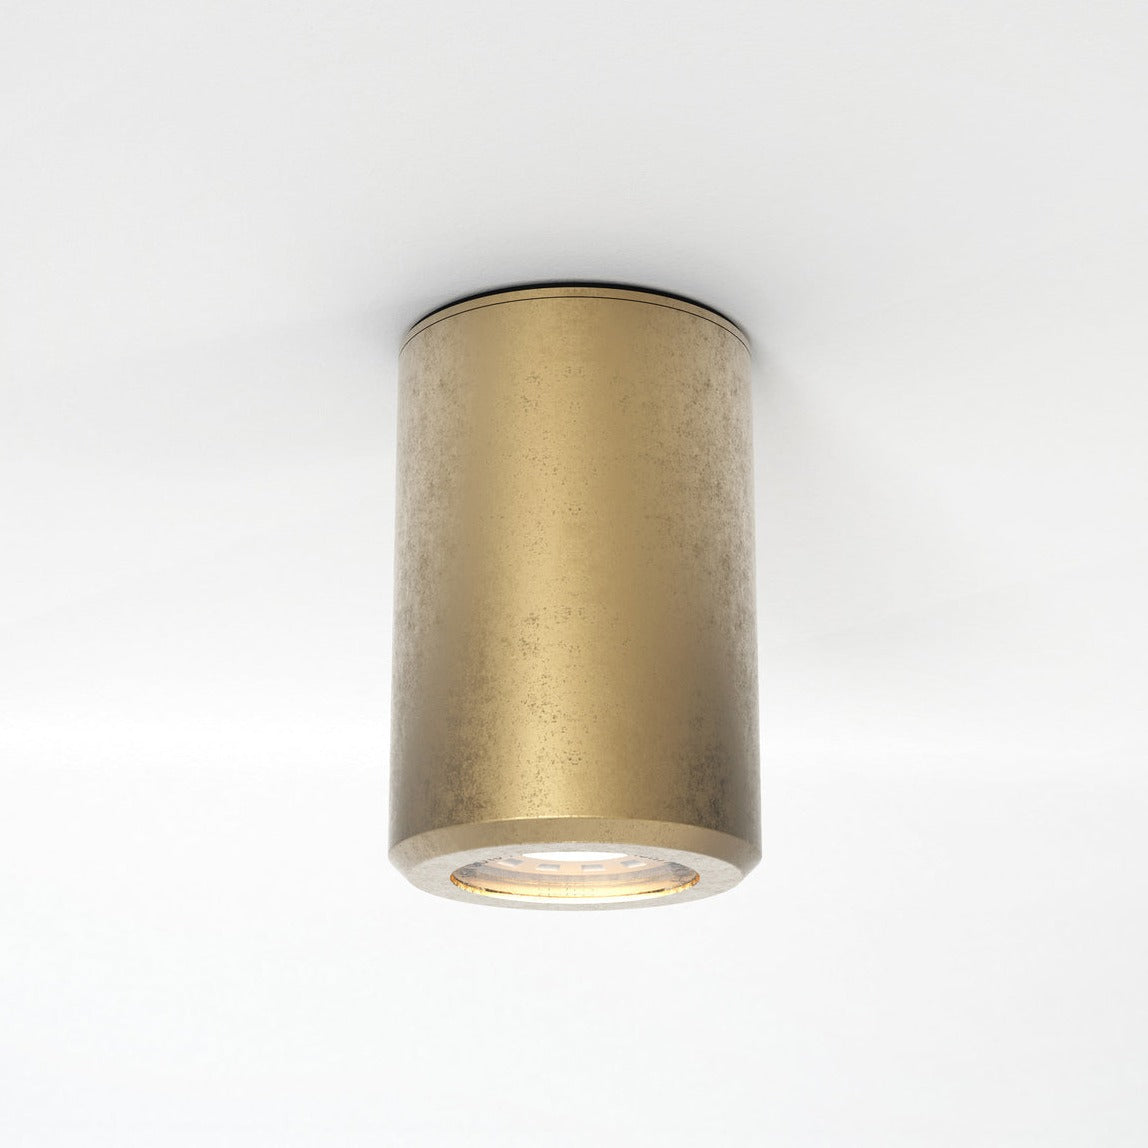 Jura, Ceiling Spot Light, Solid Brass, GU10, IP44